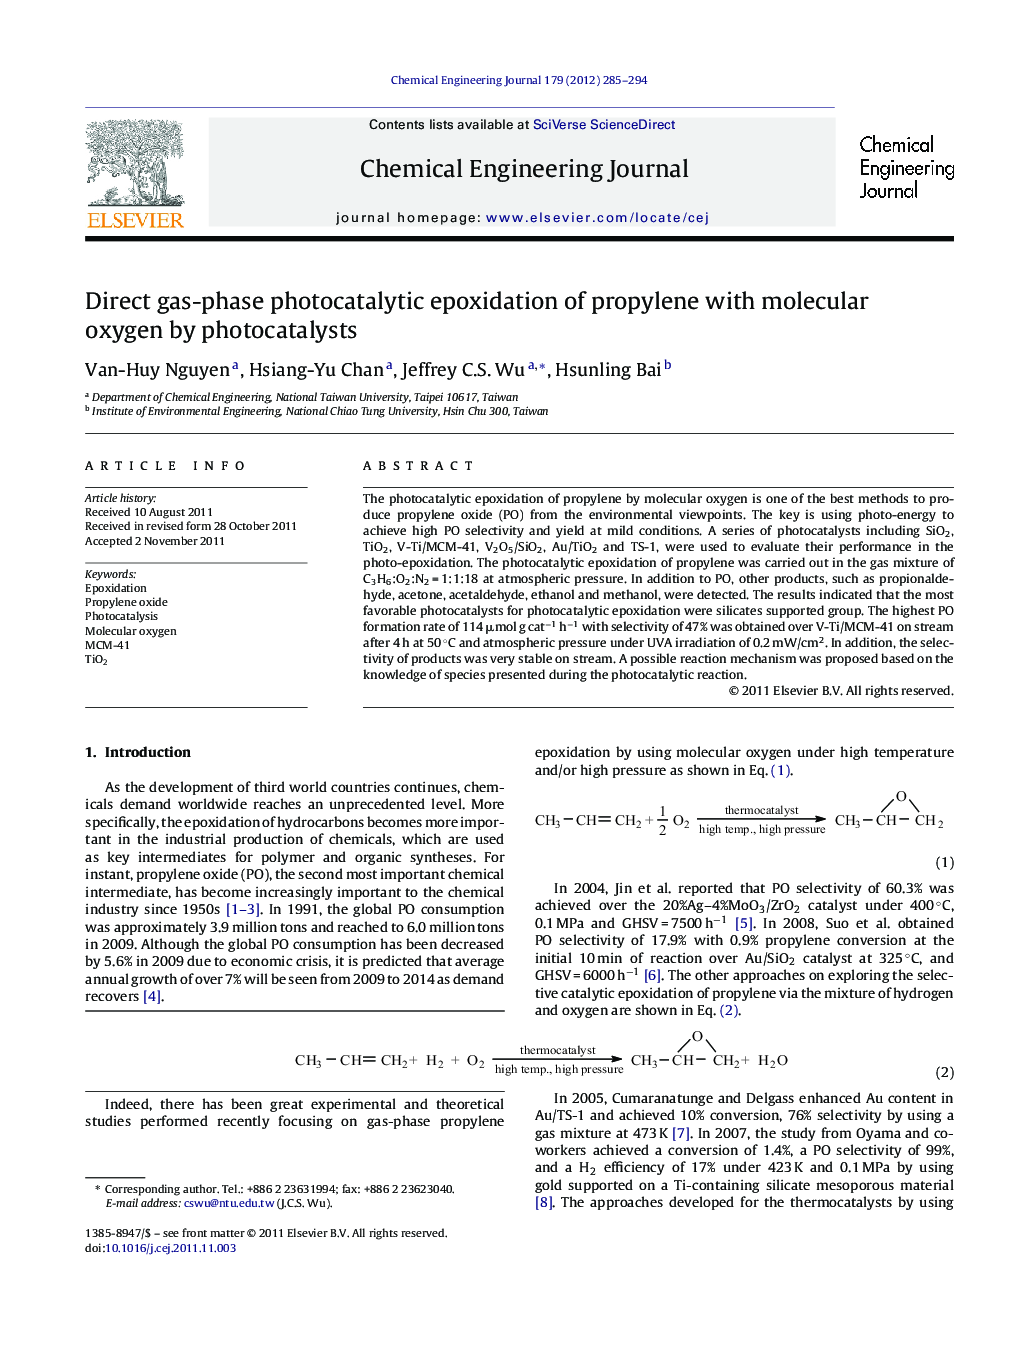 Direct gas-phase photocatalytic epoxidation of propylene with molecular oxygen by photocatalysts